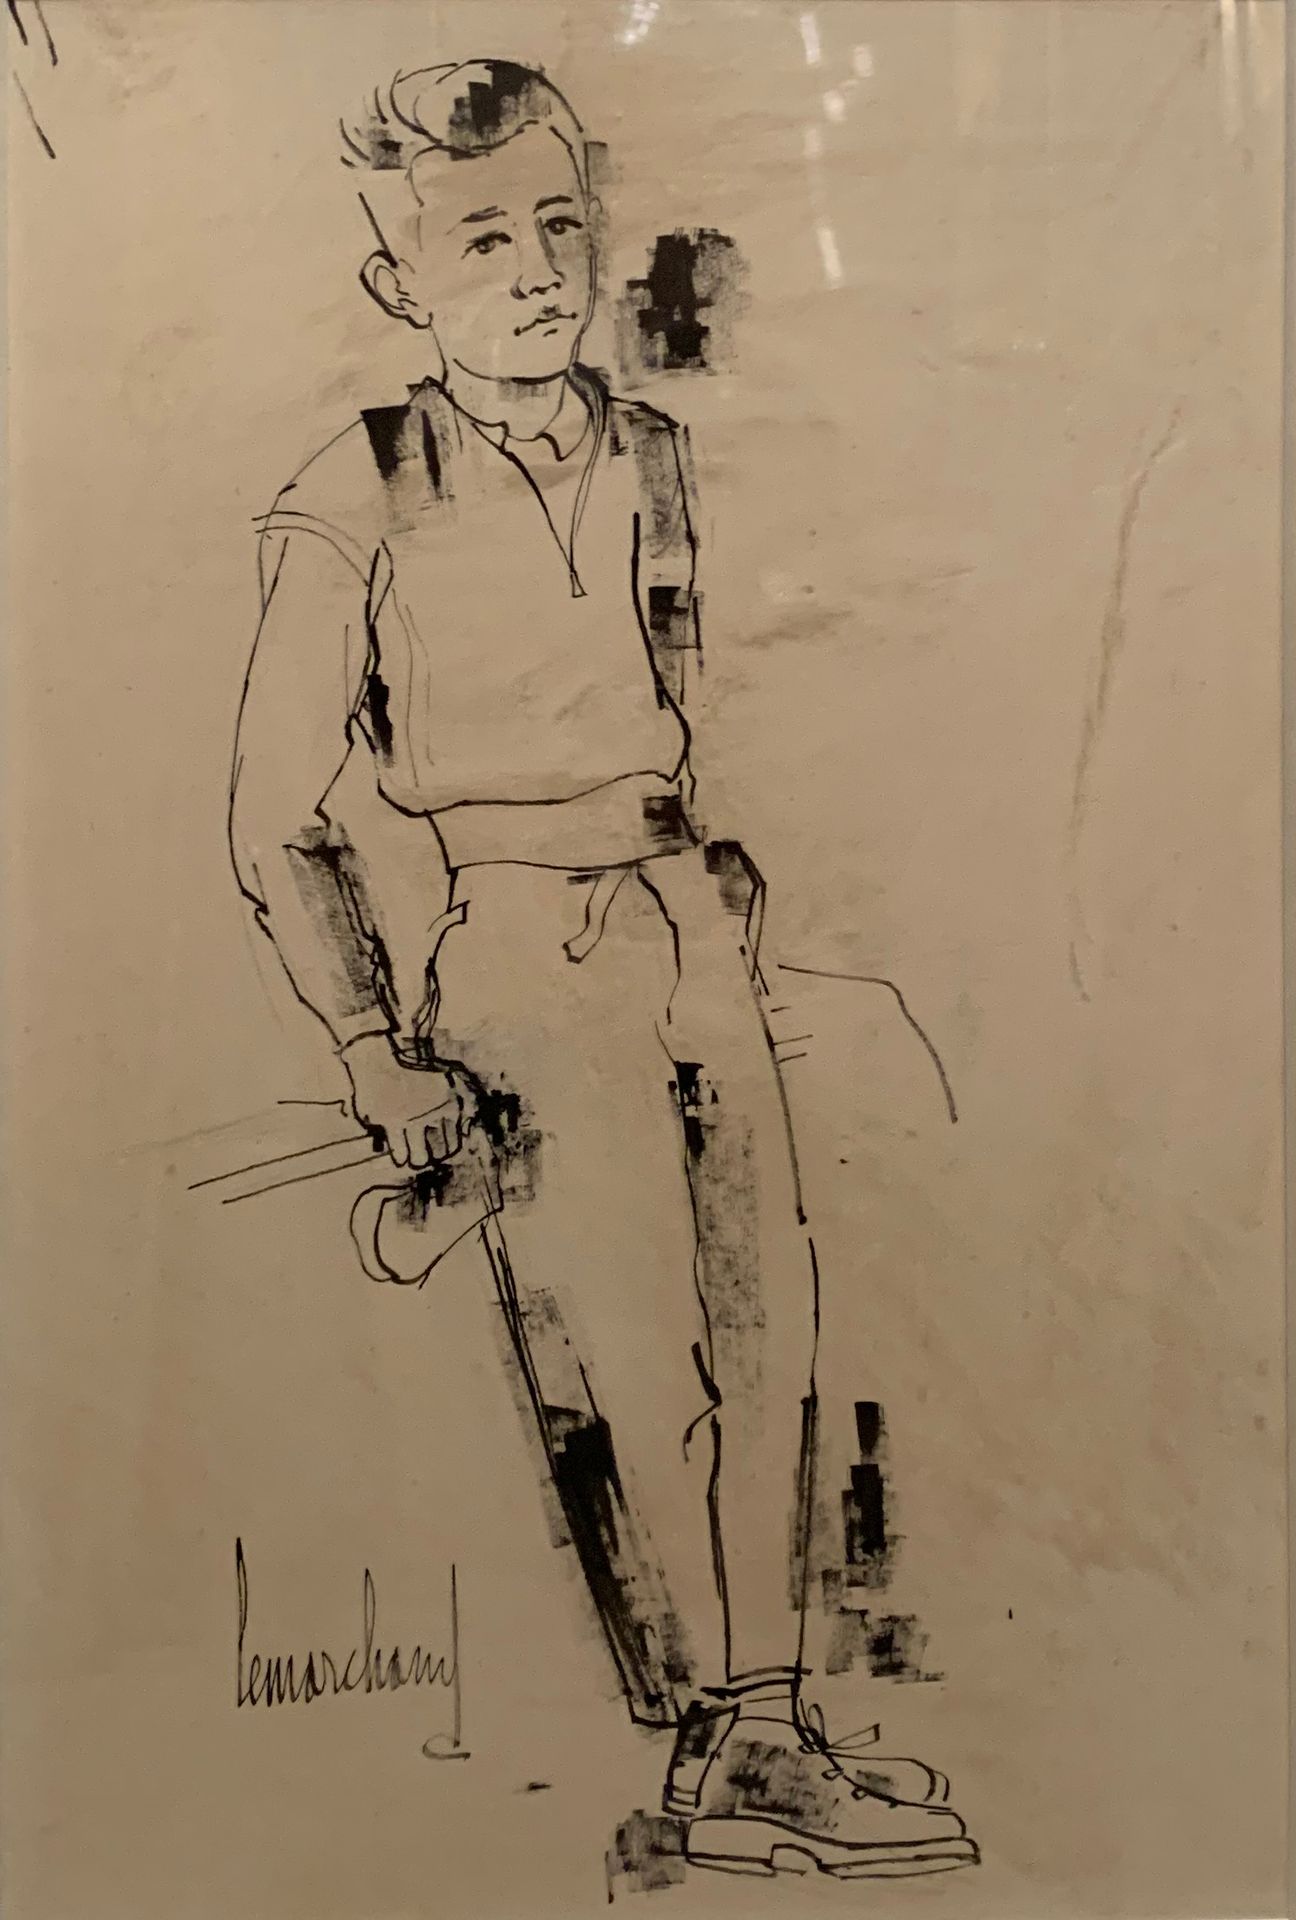 Null 皮埃尔-莱马赫德 (1906-1970)

年轻人脚下的画像

左下角有水墨签名

55 x 35厘米。